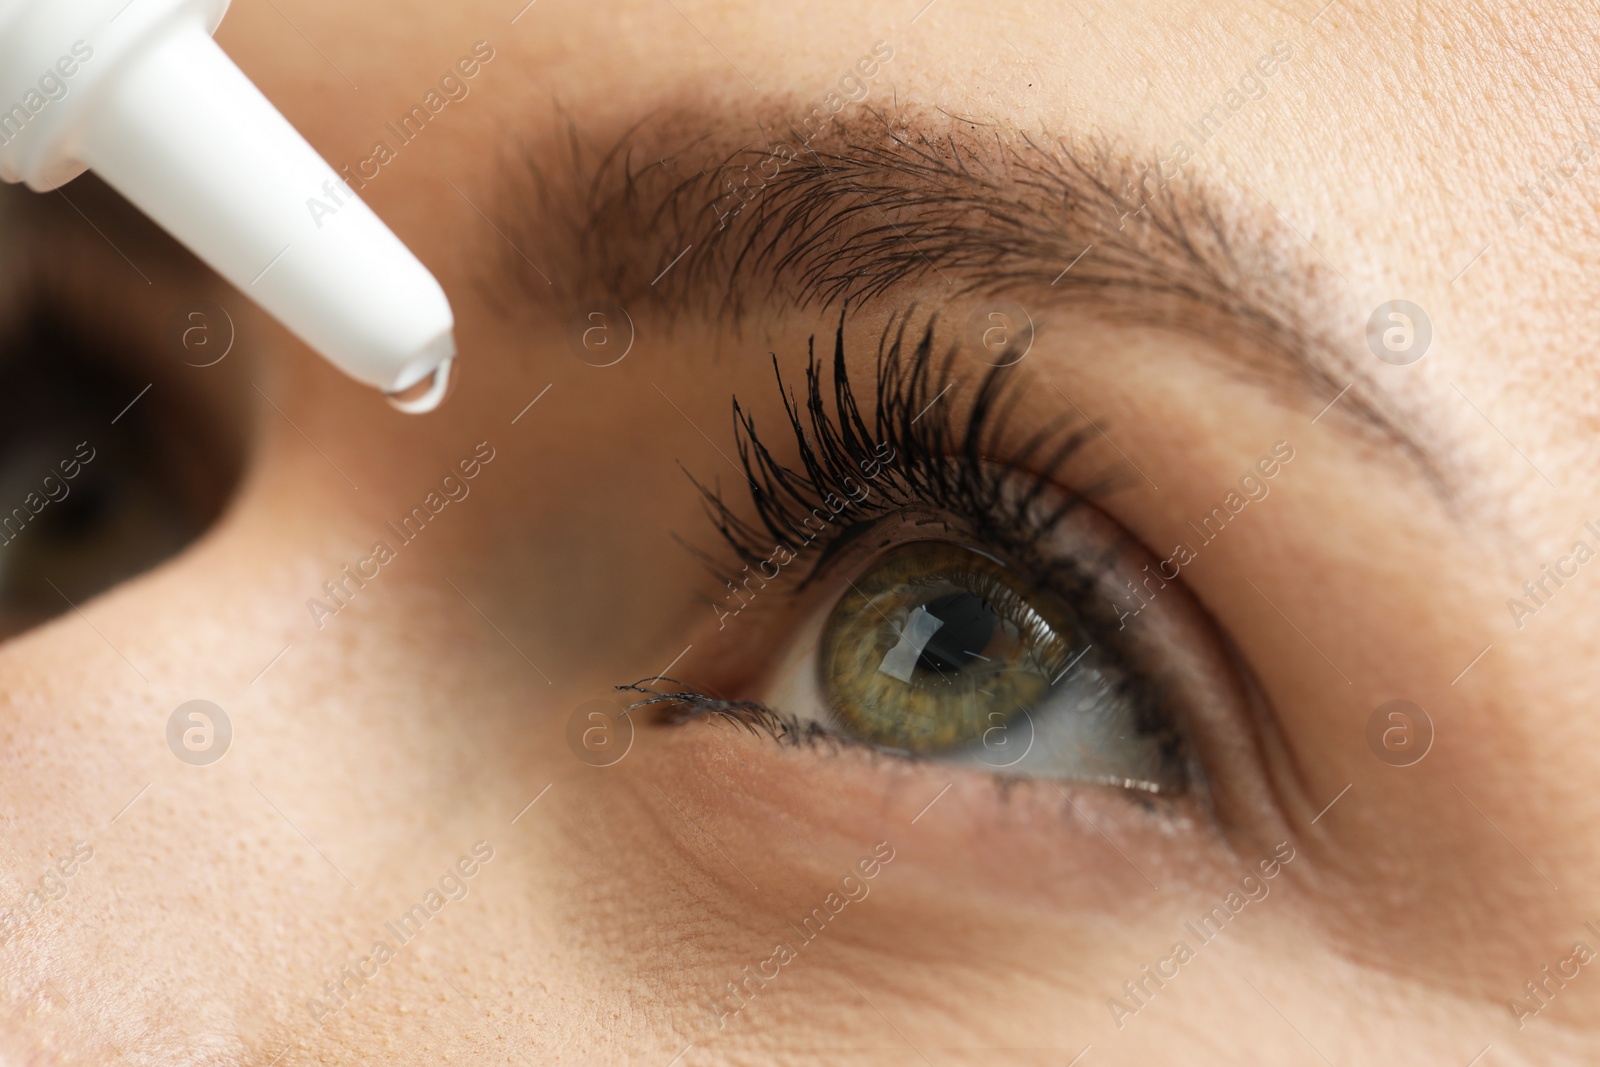 Photo of Woman applying medical eye drops, macro view